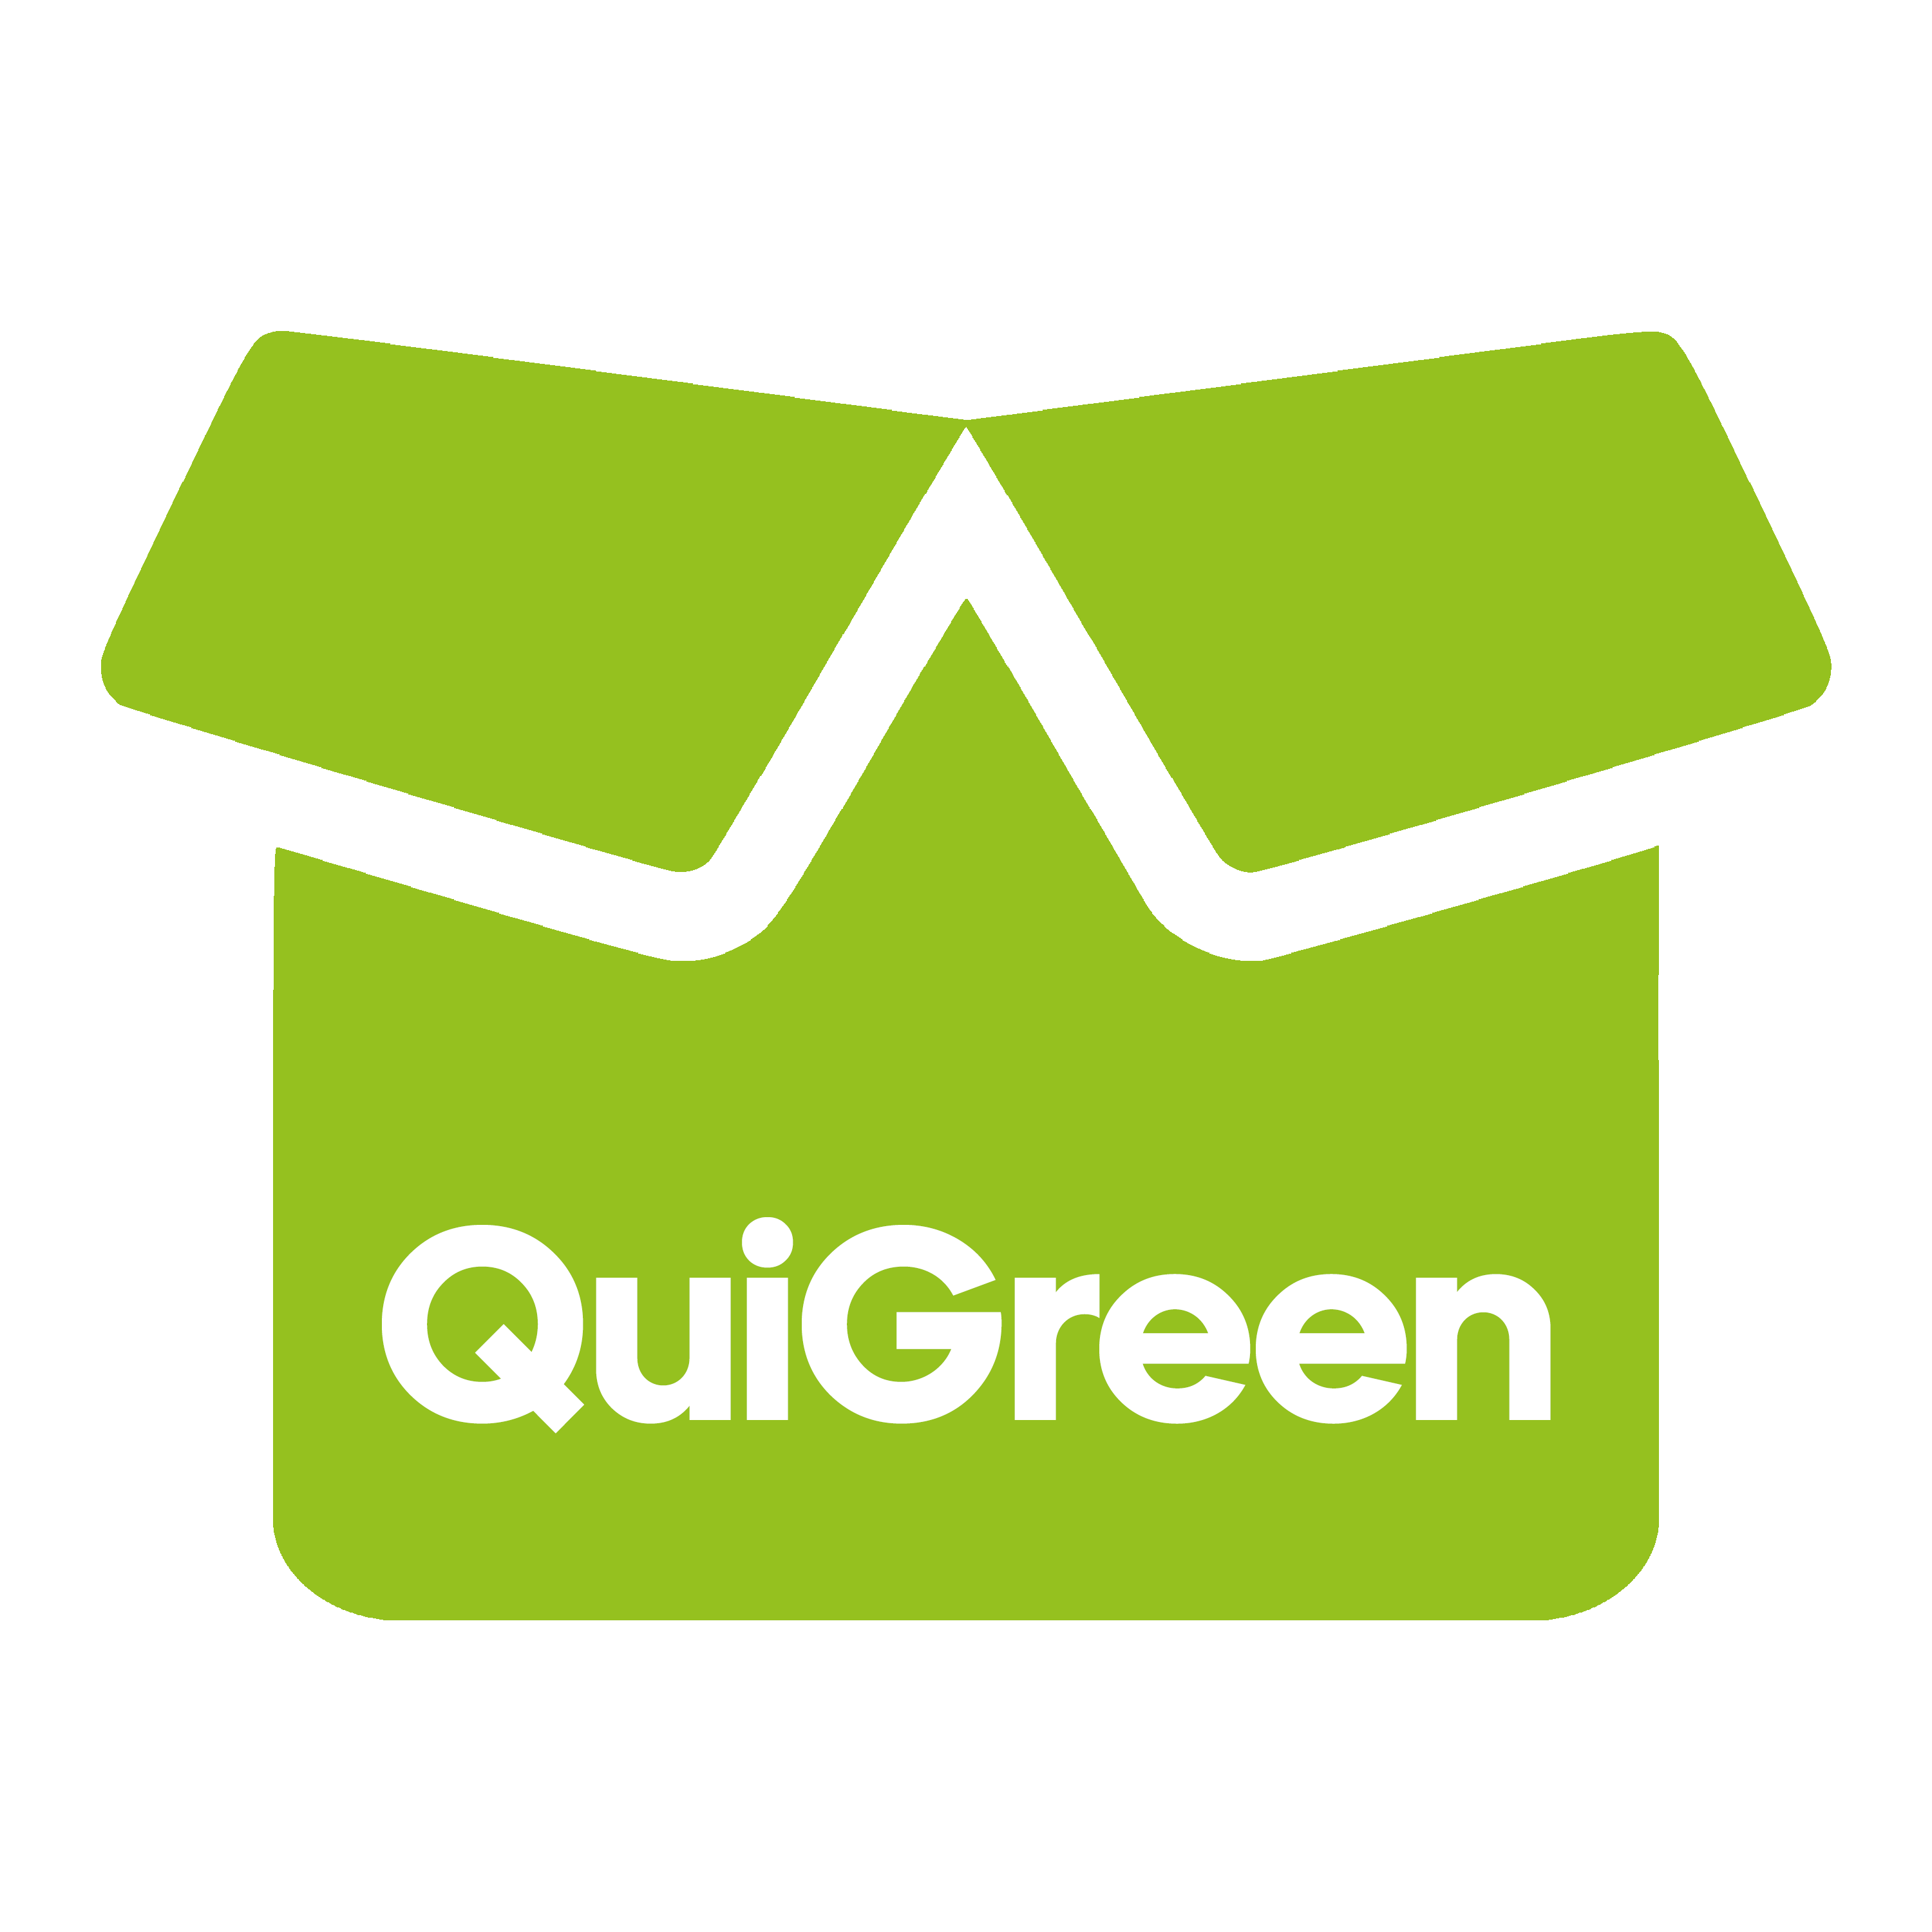 Qui Green